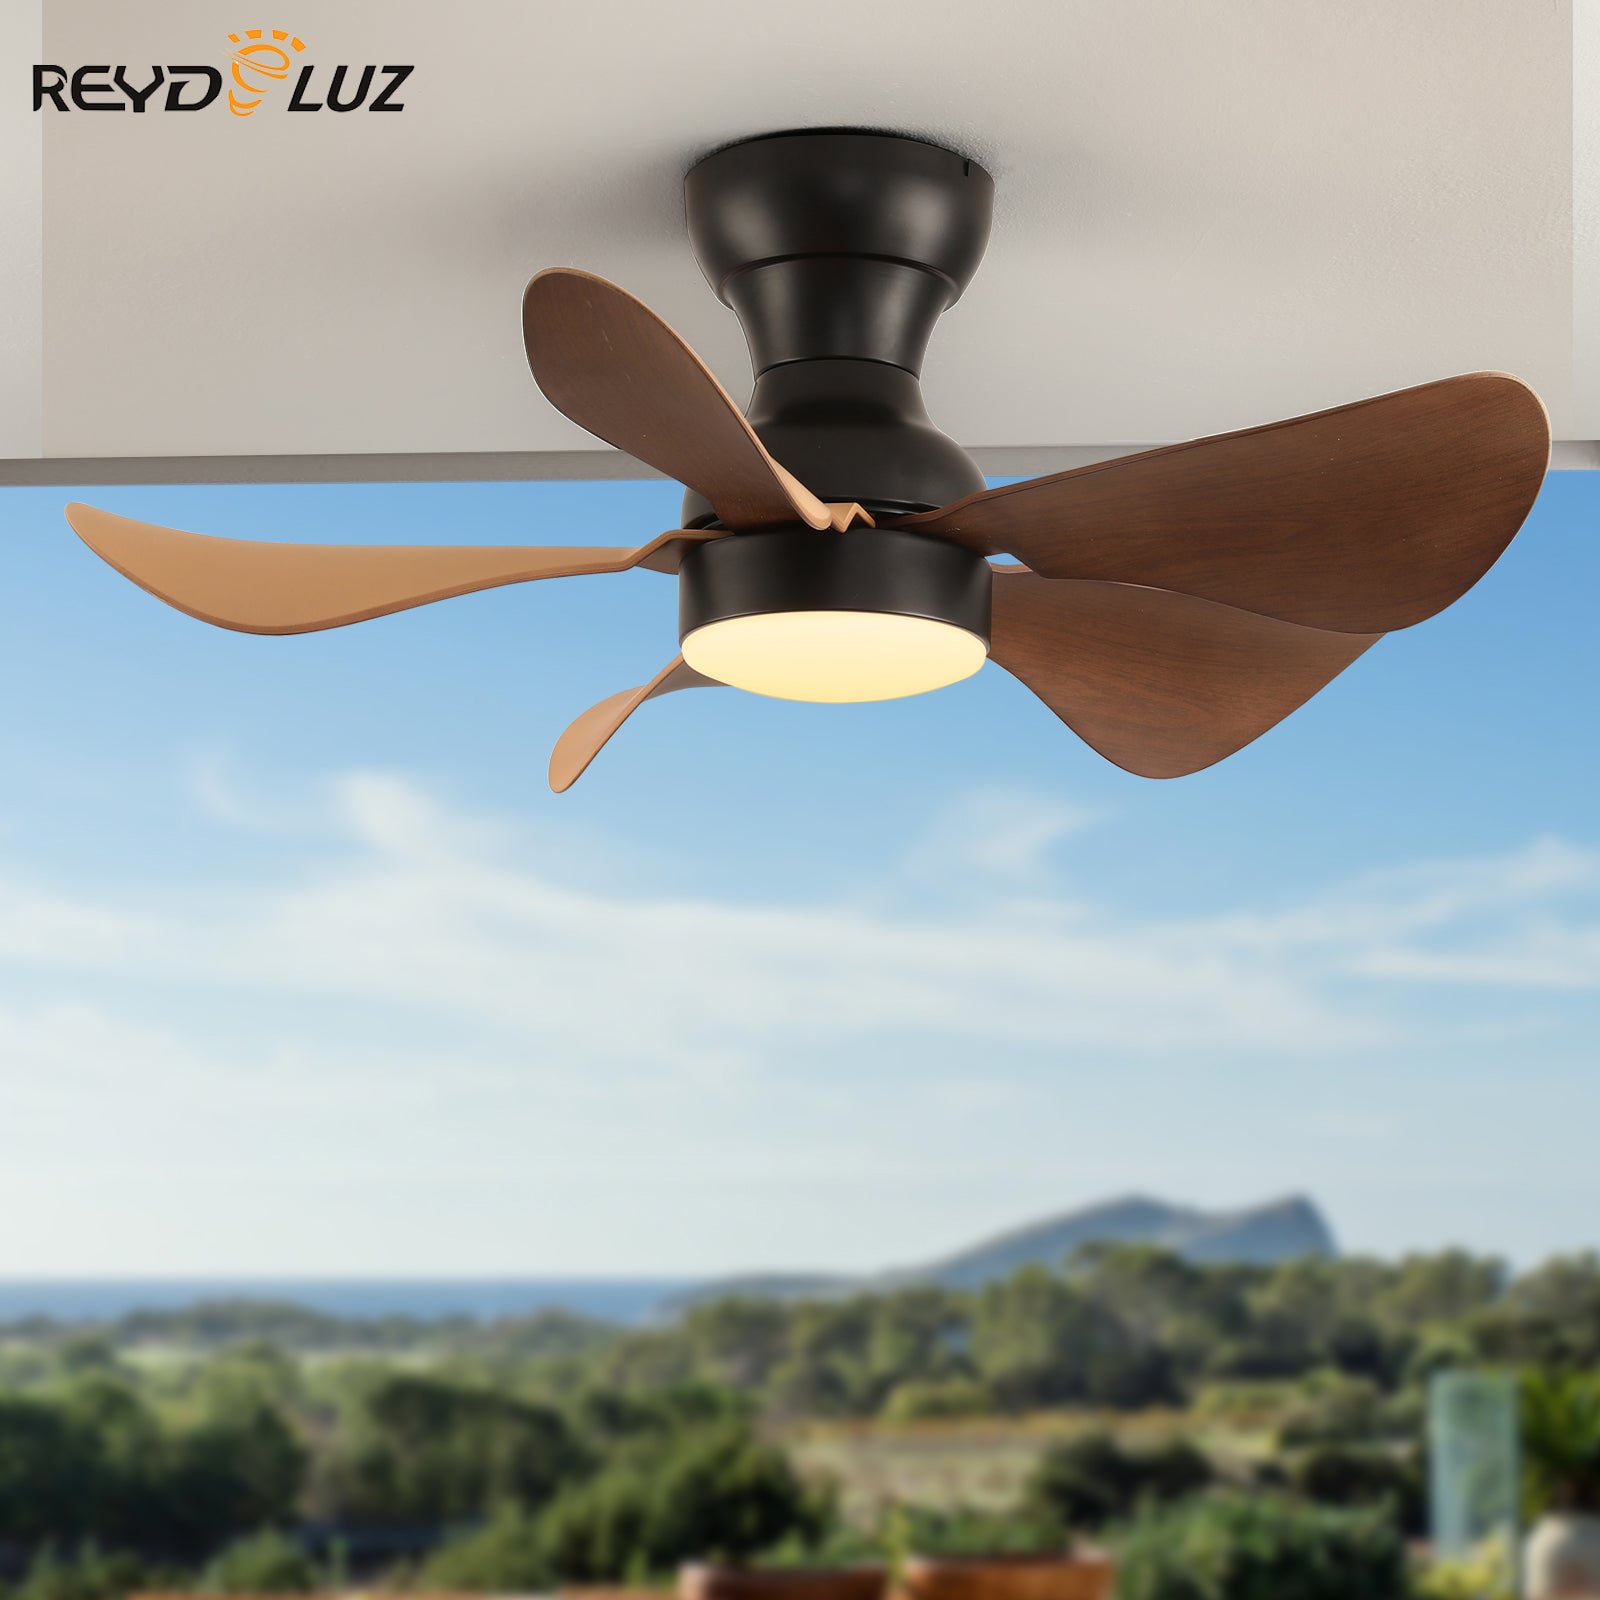 REYDELUZ 30" Ceiling Fan with Lights for 5 Blades Modern Ceiling Fans for Indoor.